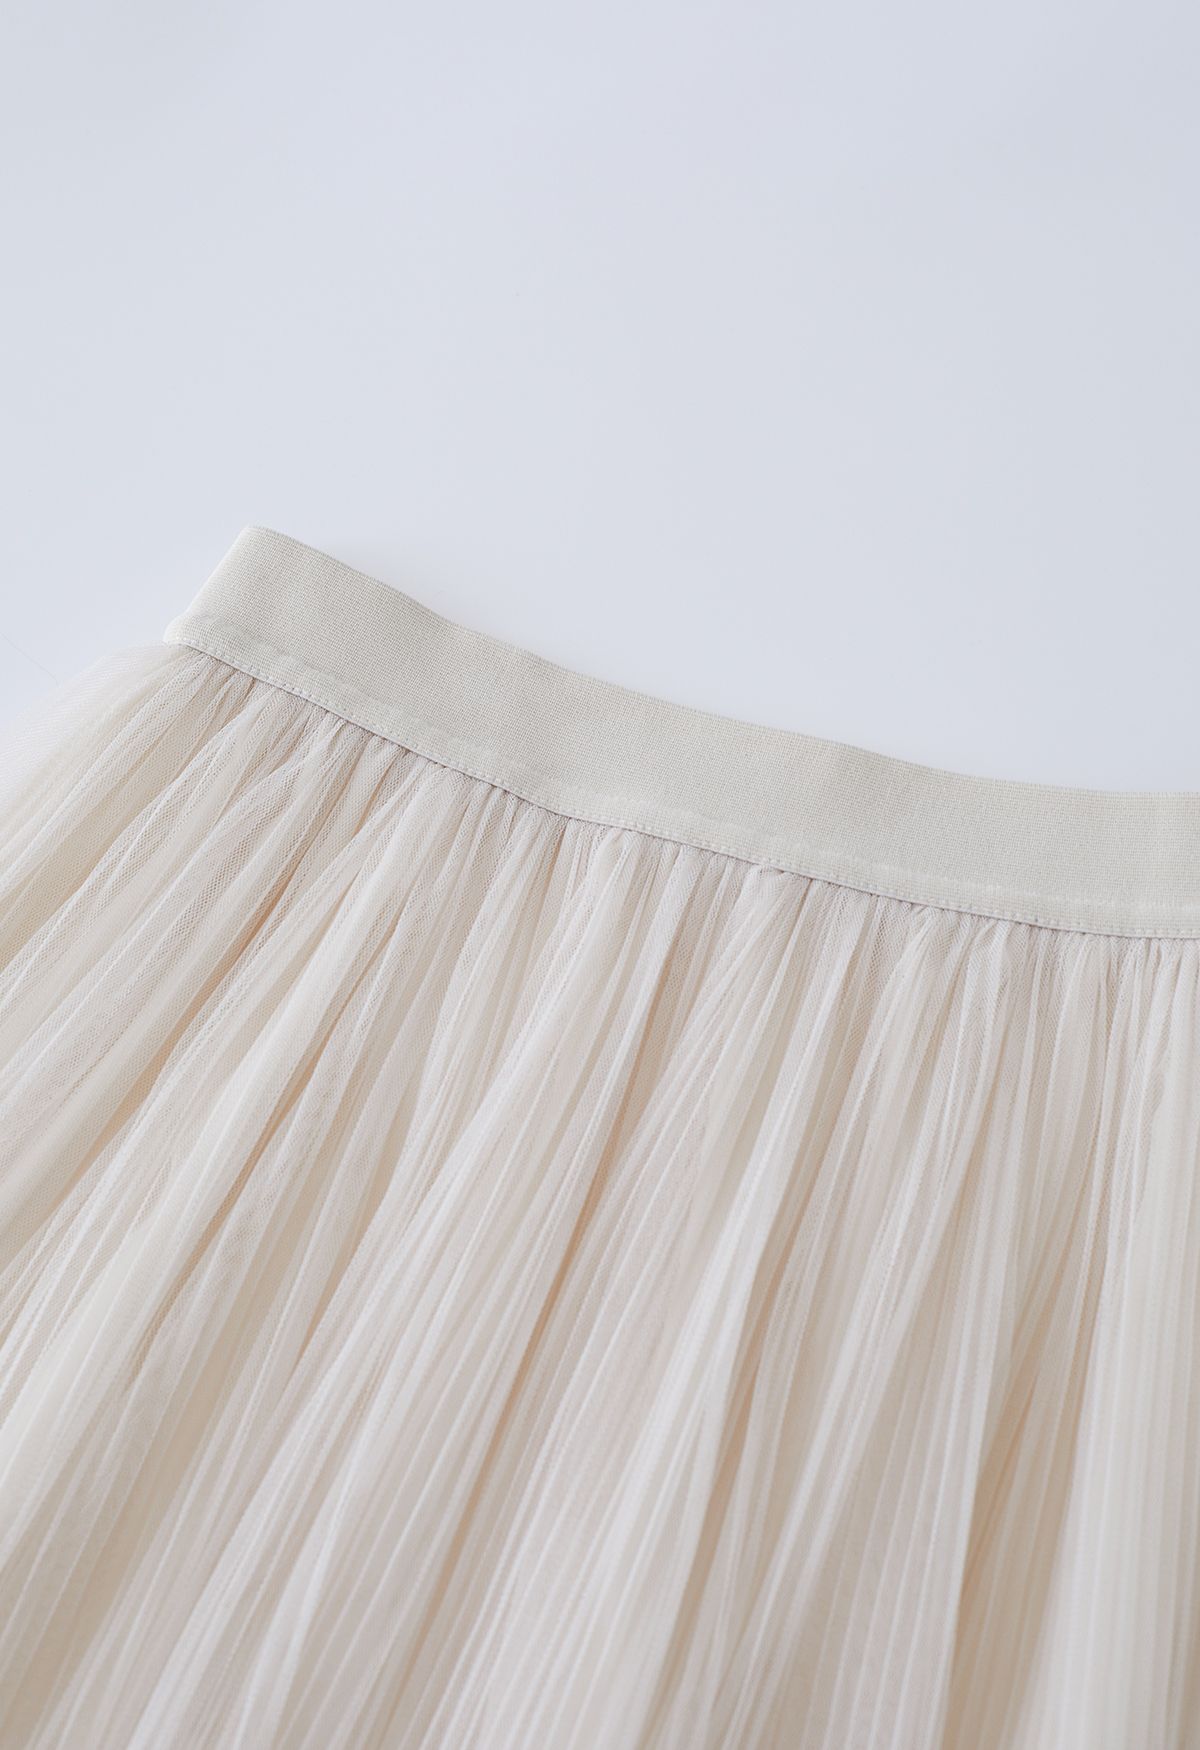 Fairy Plisse Mesh Tulle Midi Skirt in Cream